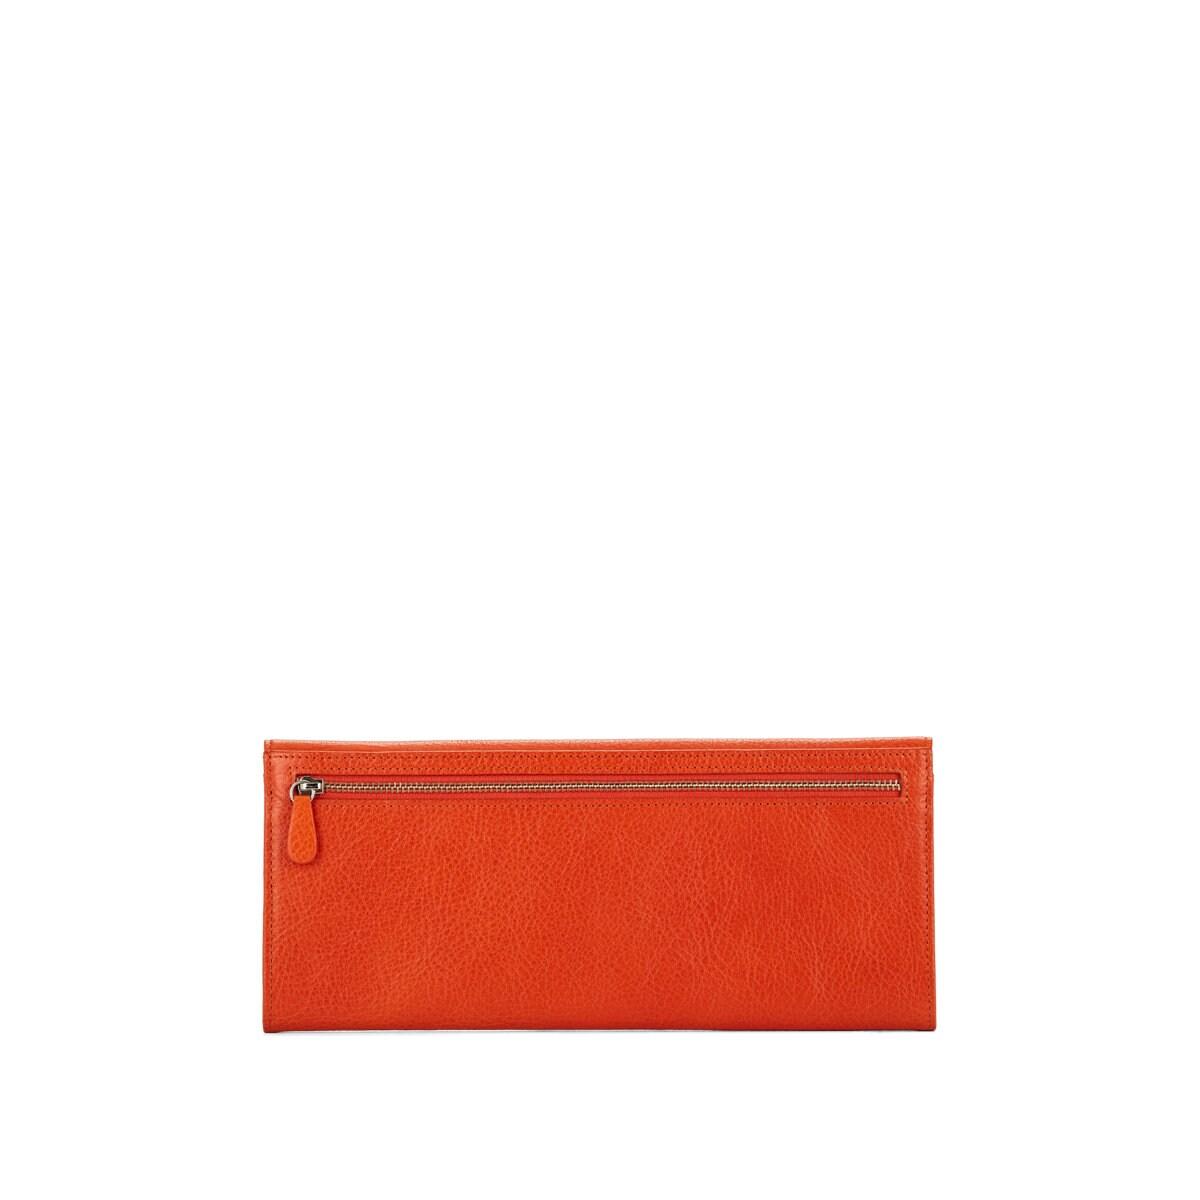 Barneys New York Leather Travel Wallet in Orange for Men - Lyst